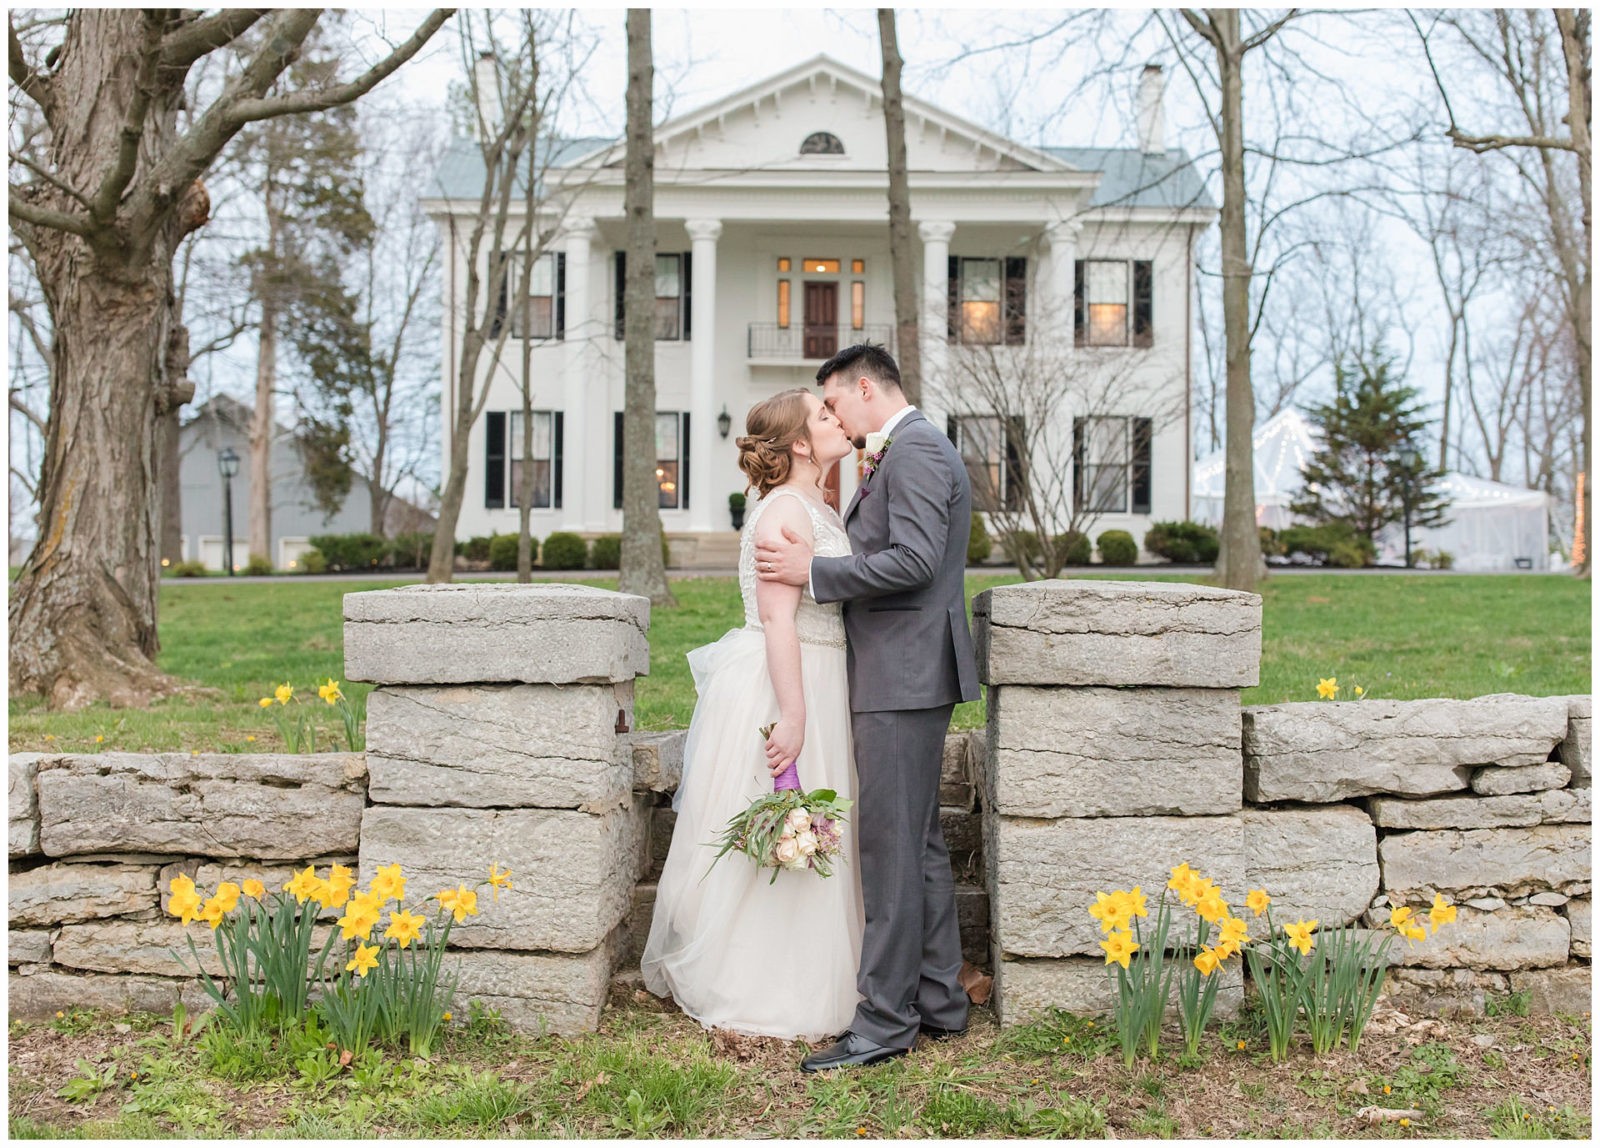 Bride and Groom Photos at Ashford Acres Inn in Cynthiana, Kentucky.